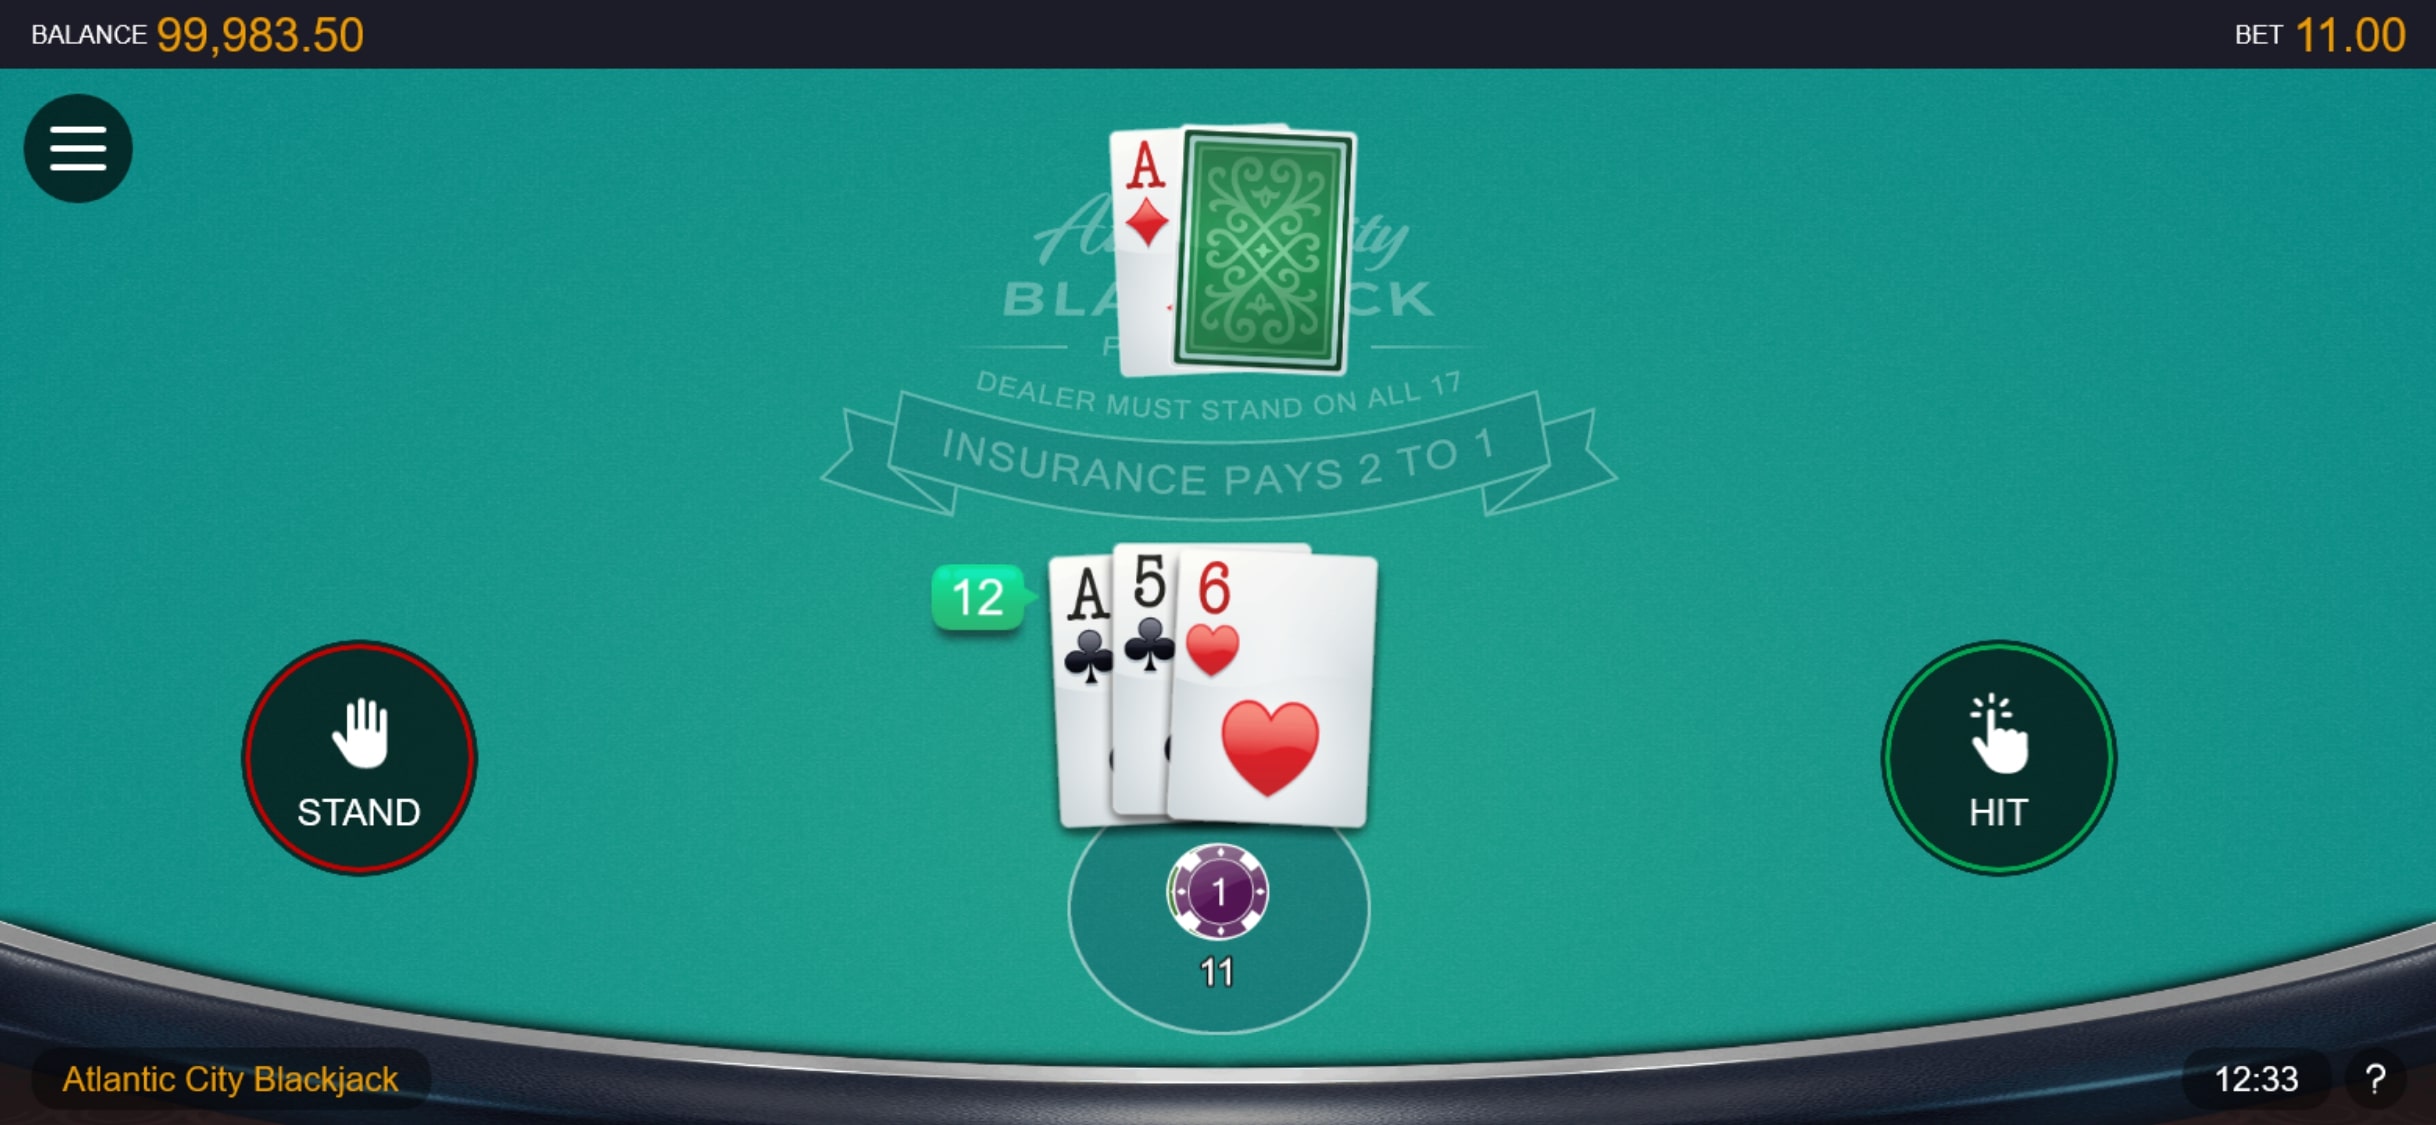 Hyper Casino Mobile Slots Review